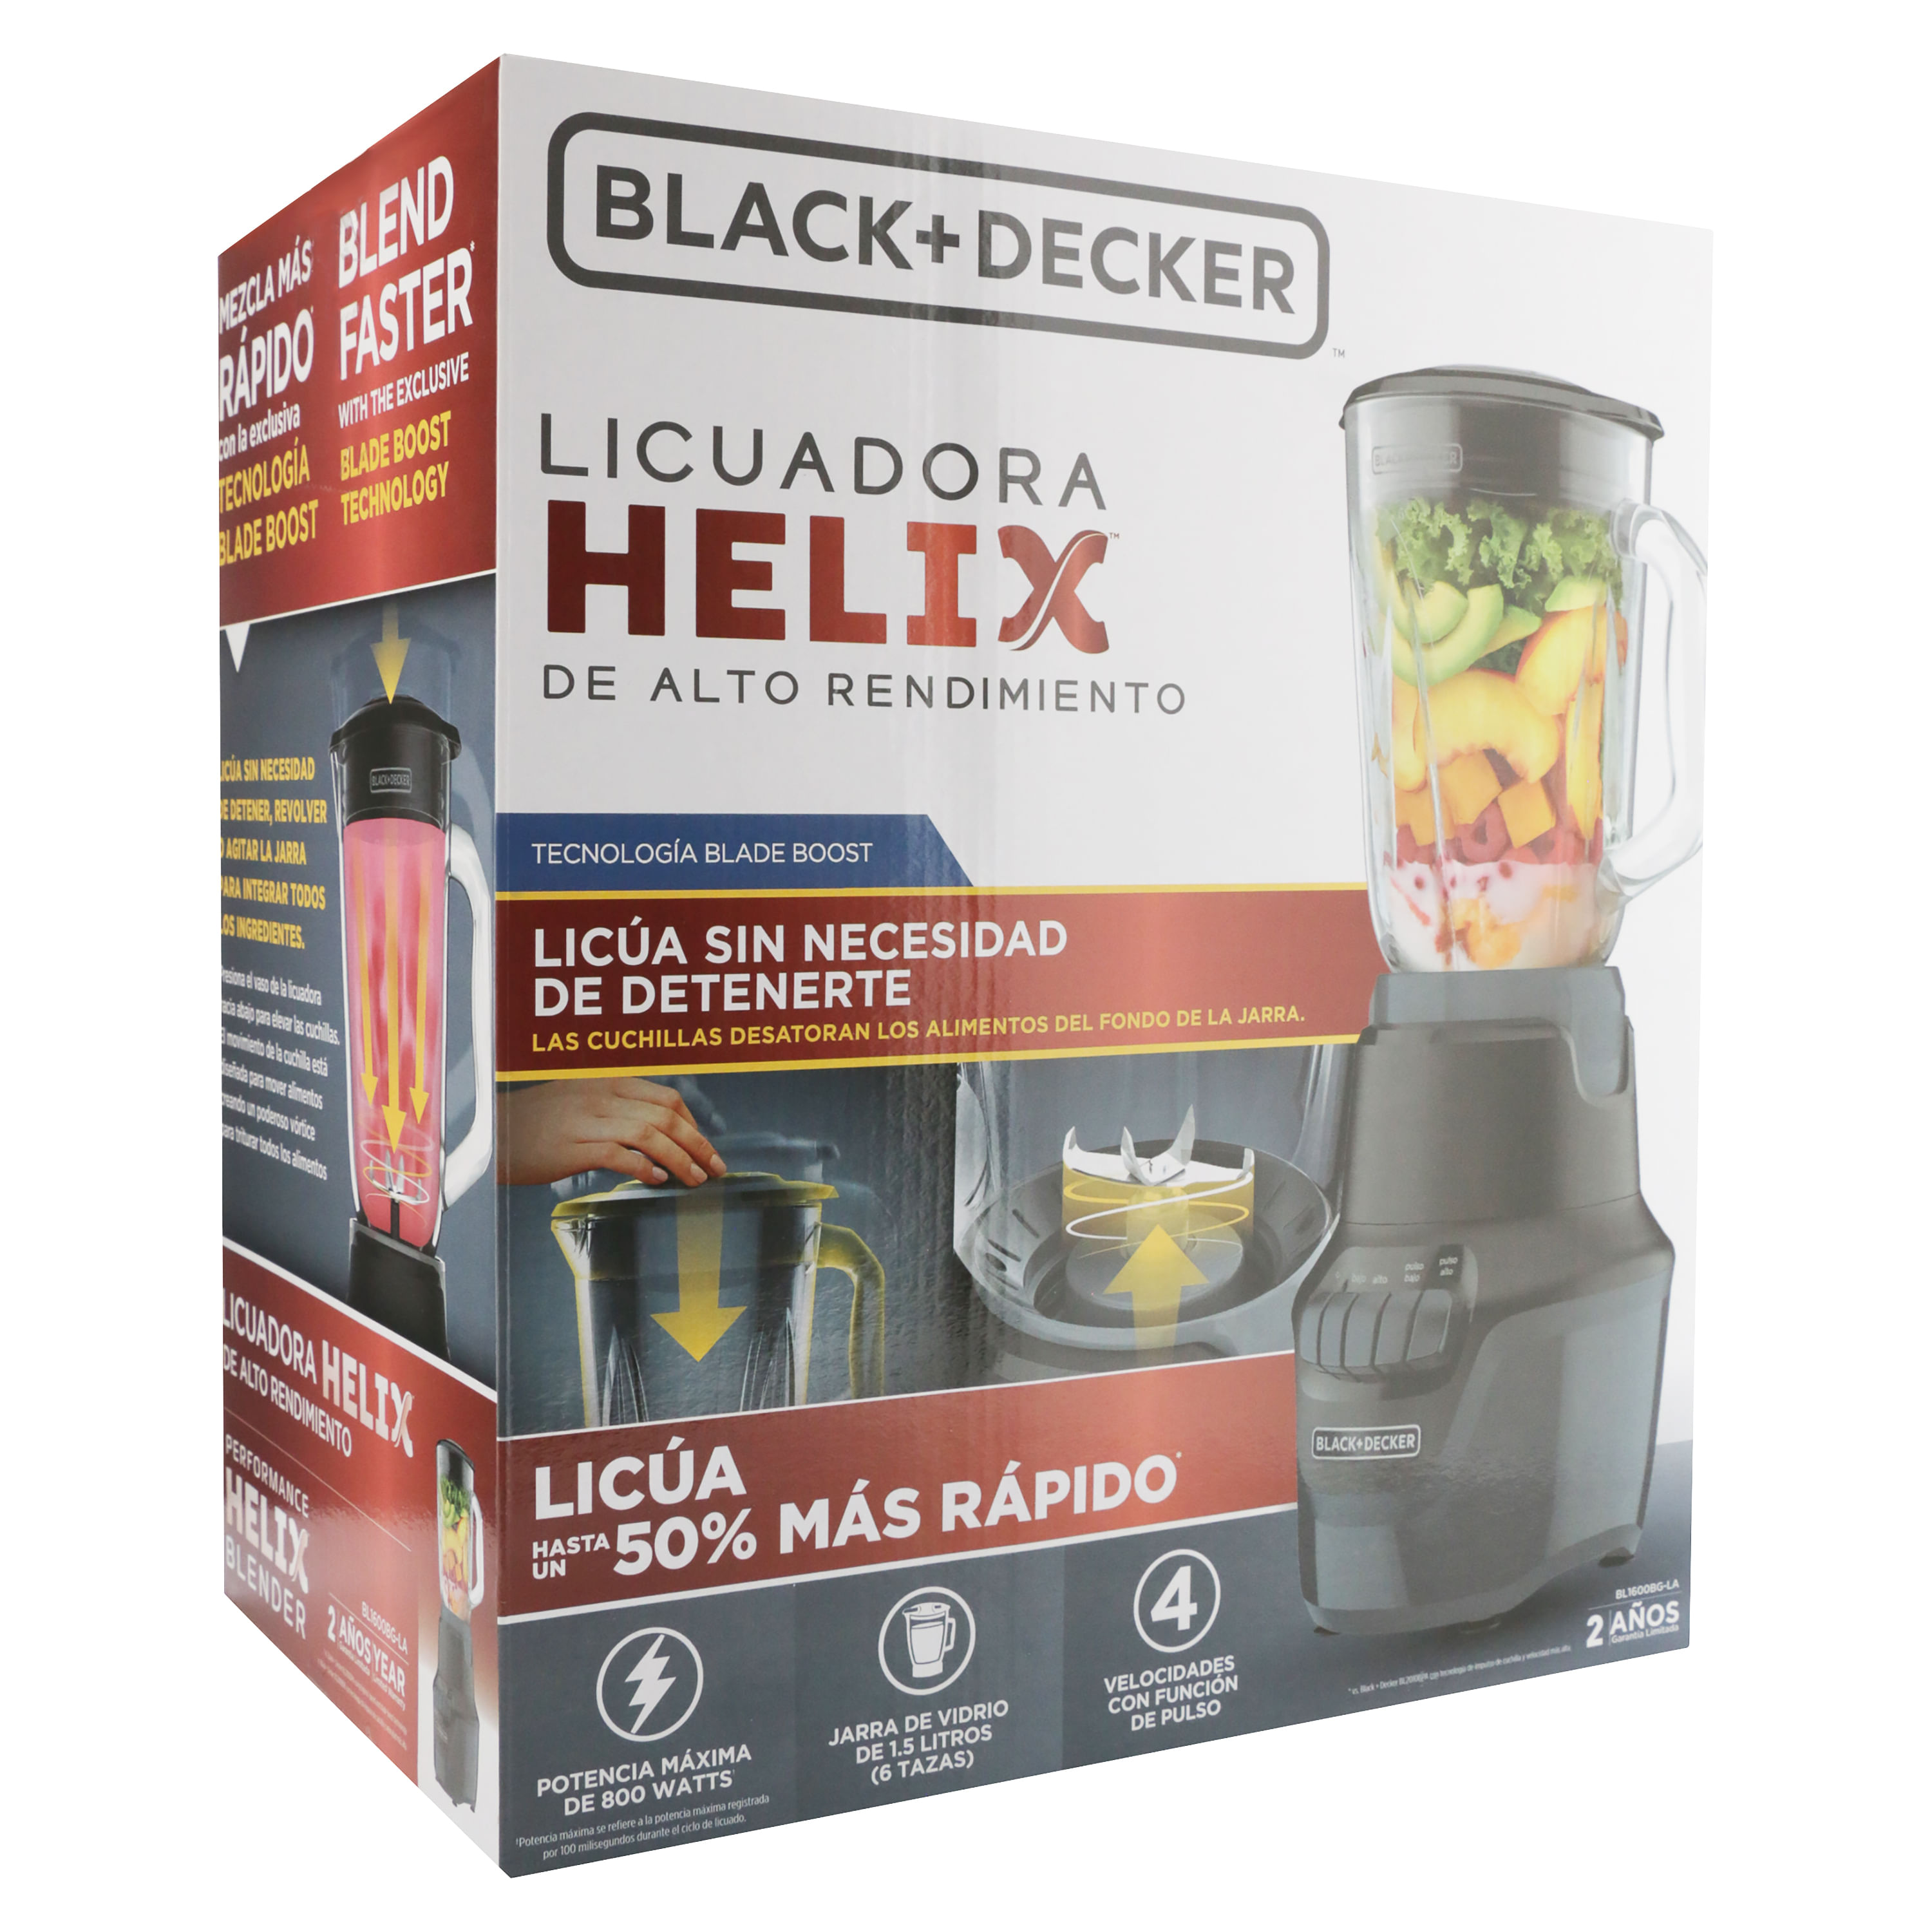 LICUADORA BLACK DECKER HILEX 800W JARRA VIDRIO 1.5 LTS 4 VEL. NEGRA - Alti